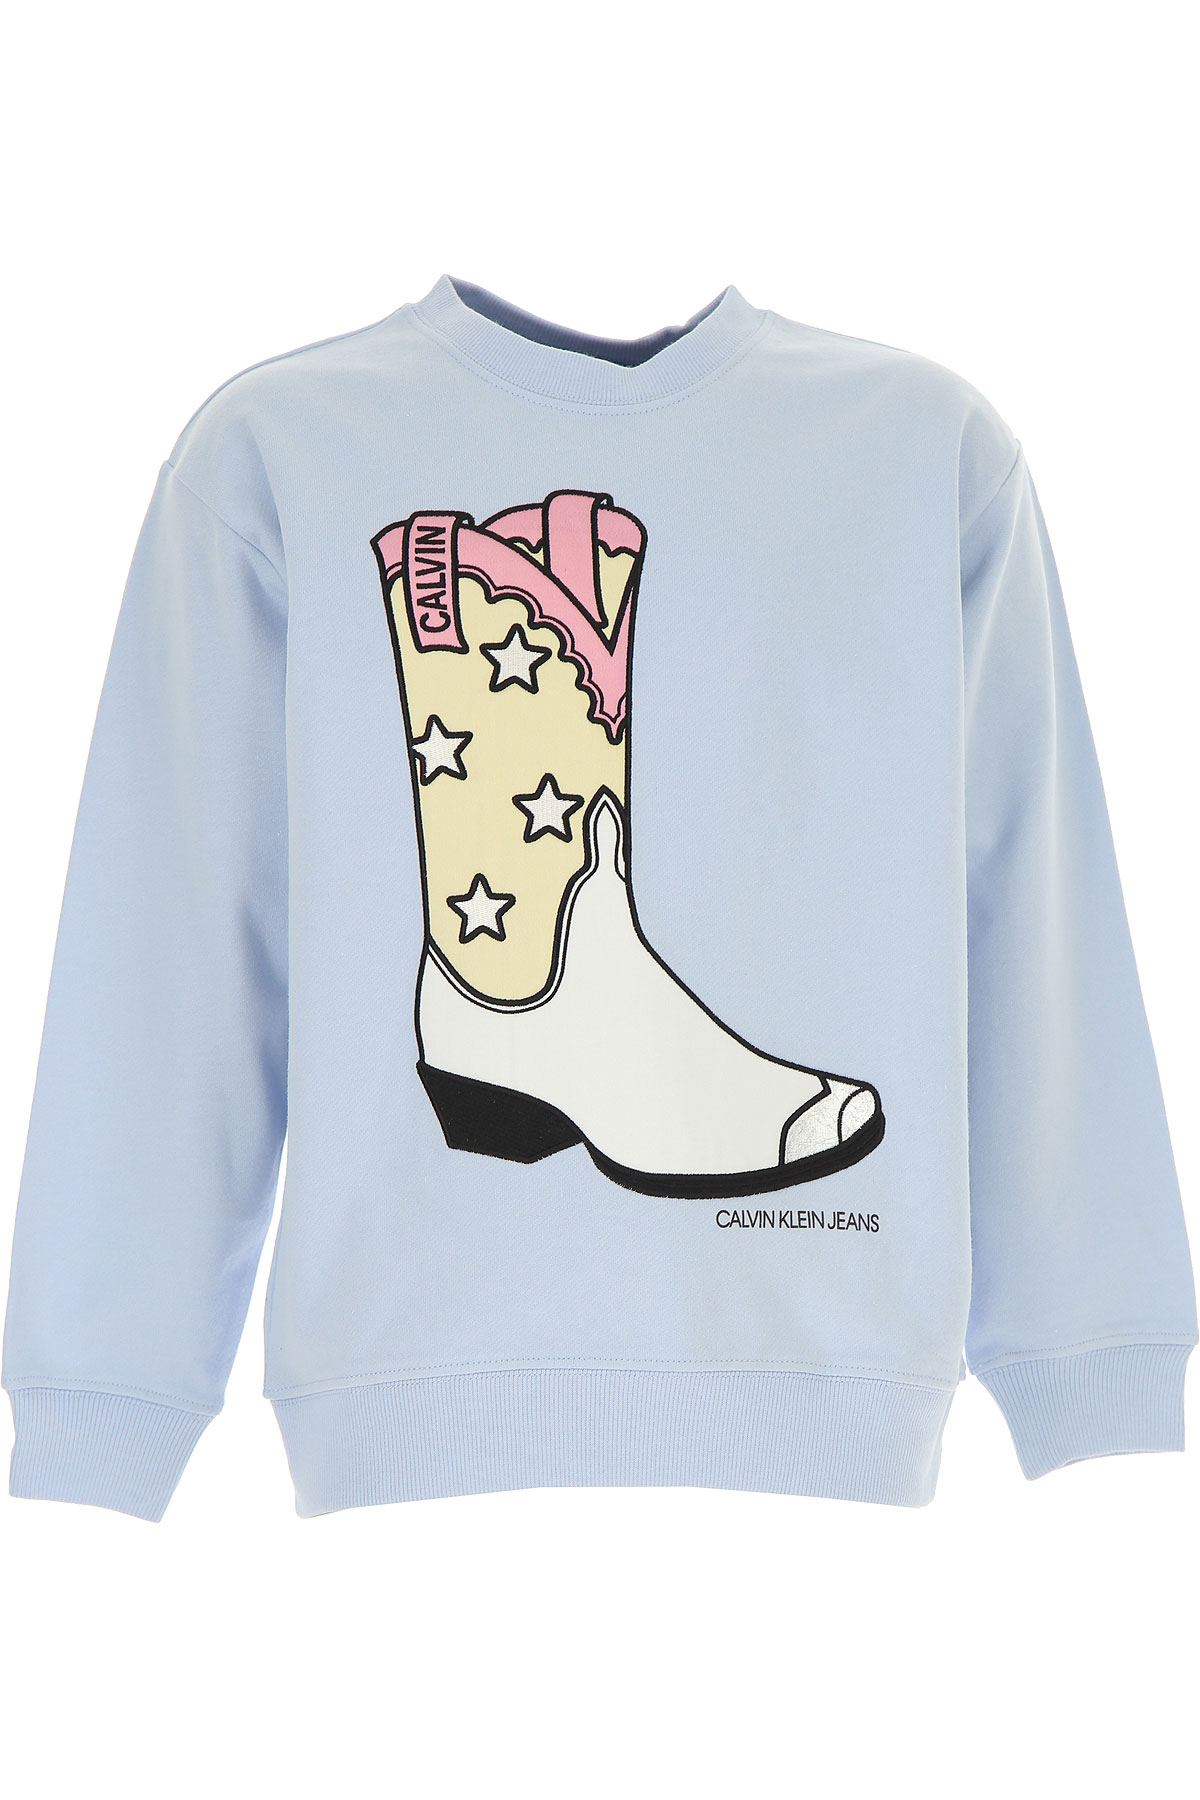 Calvin Klein Kinder Sweatshirt & Kapuzenpullover für Mädchen Günstig im Sale, Himmelblau, Baumwolle, 2017, 10Y 12Y 14Y 16Y 4Y 6Y 8Y